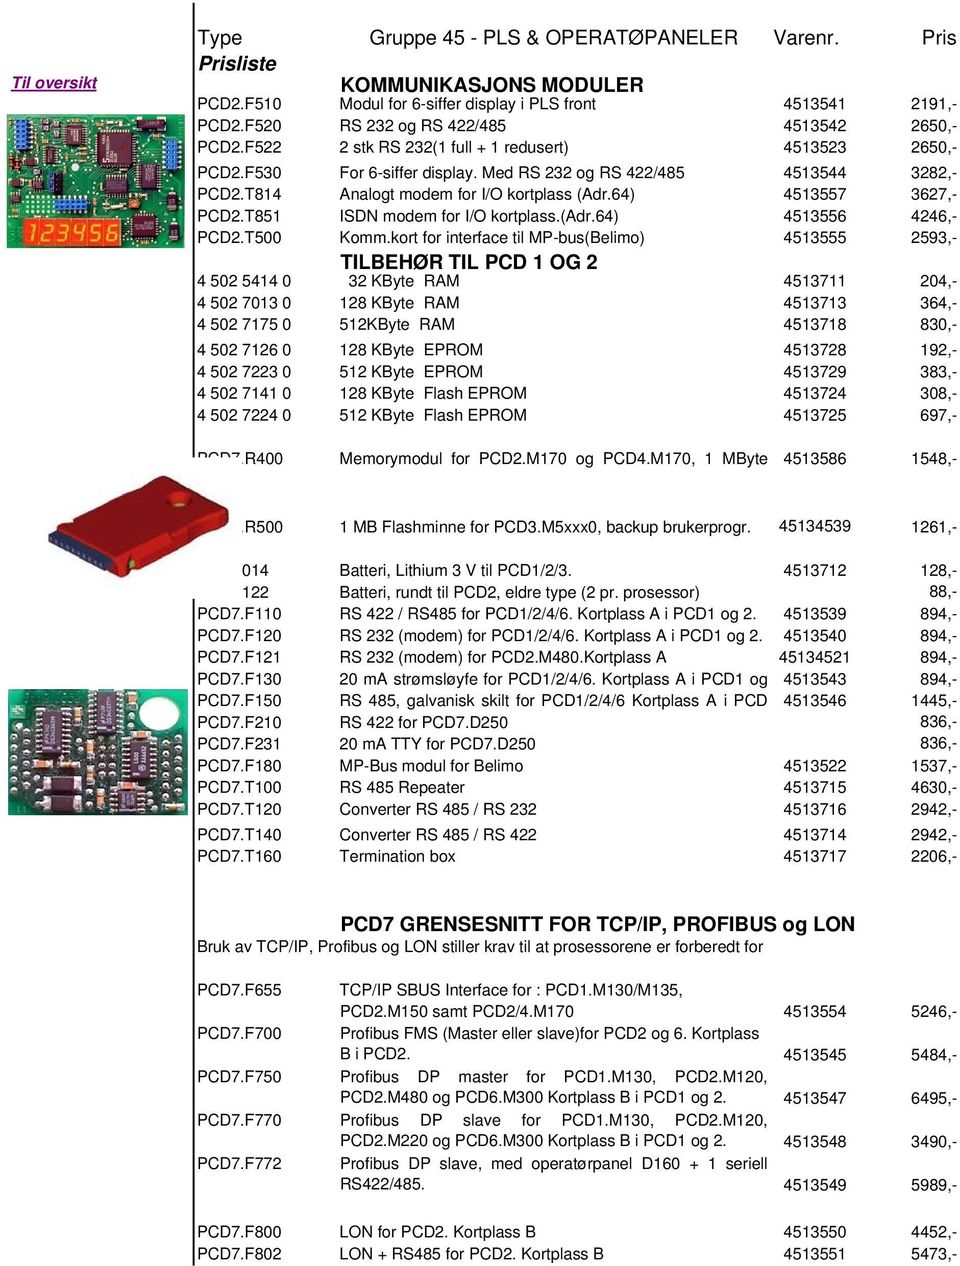 T814 Analogt modem for I/O kortplass (Adr.64) 4513557 3627,- PCD2.T851 ISDN modem for I/O kortplass.(adr.64) 4513556 4246,- PCD2.T500 Komm.